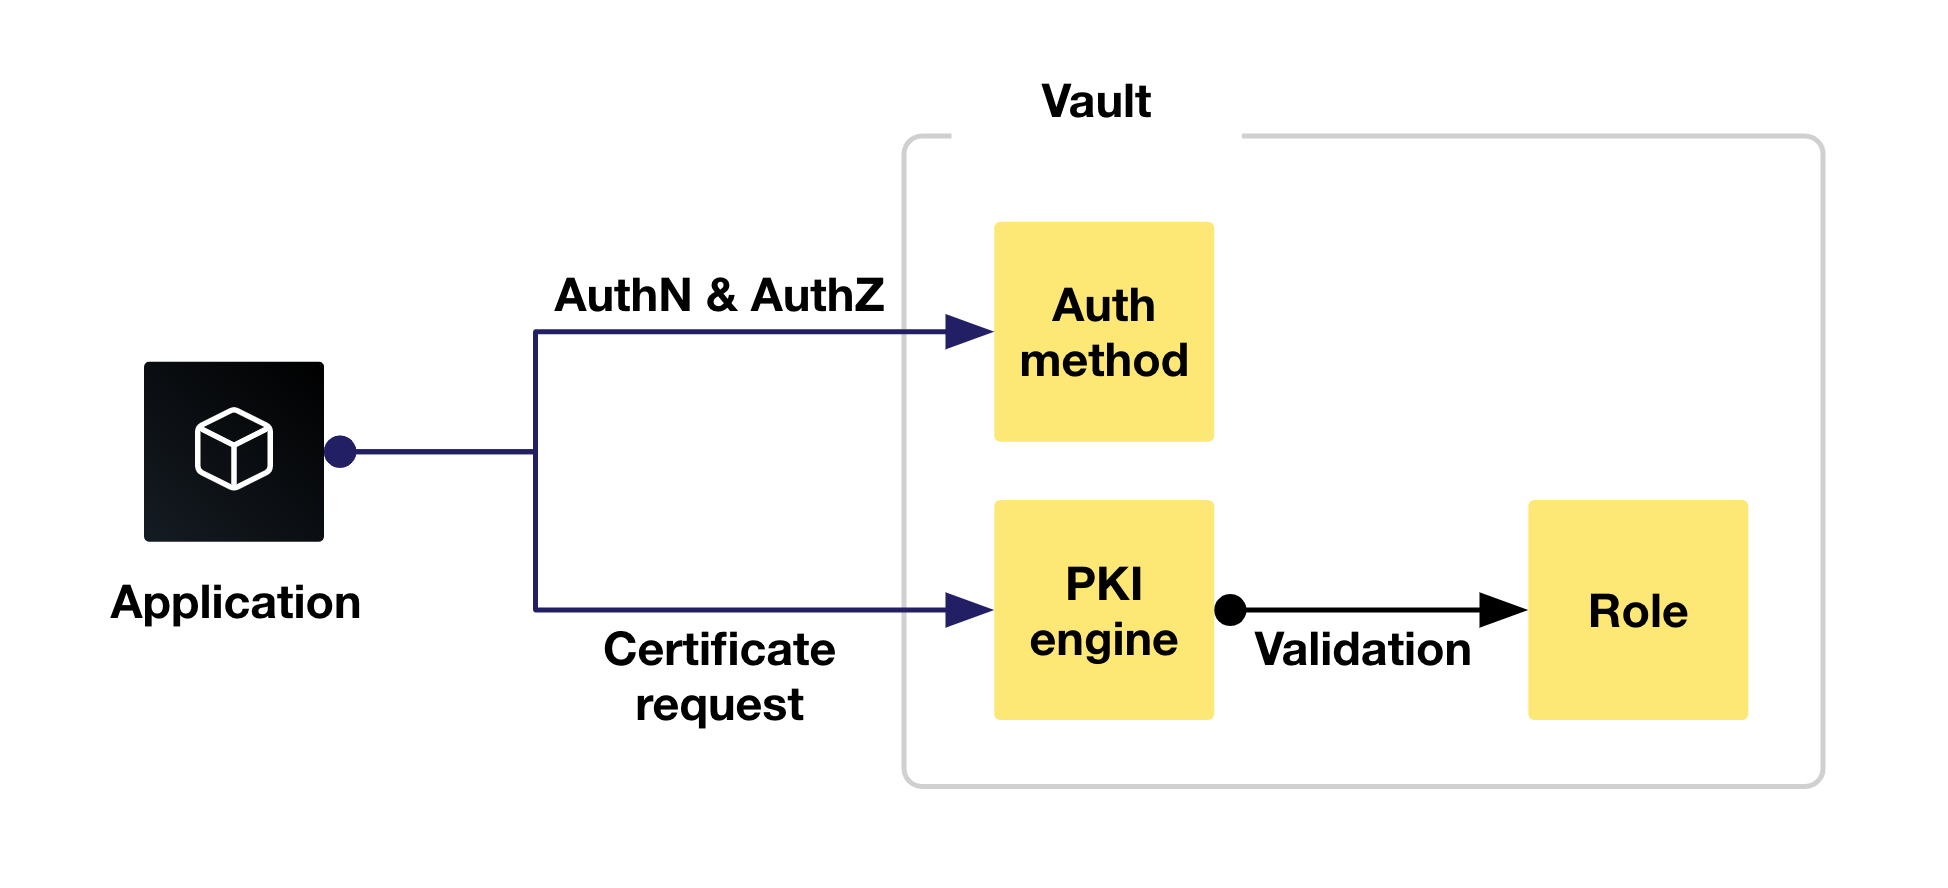 Standard PKI certificate request-validation process